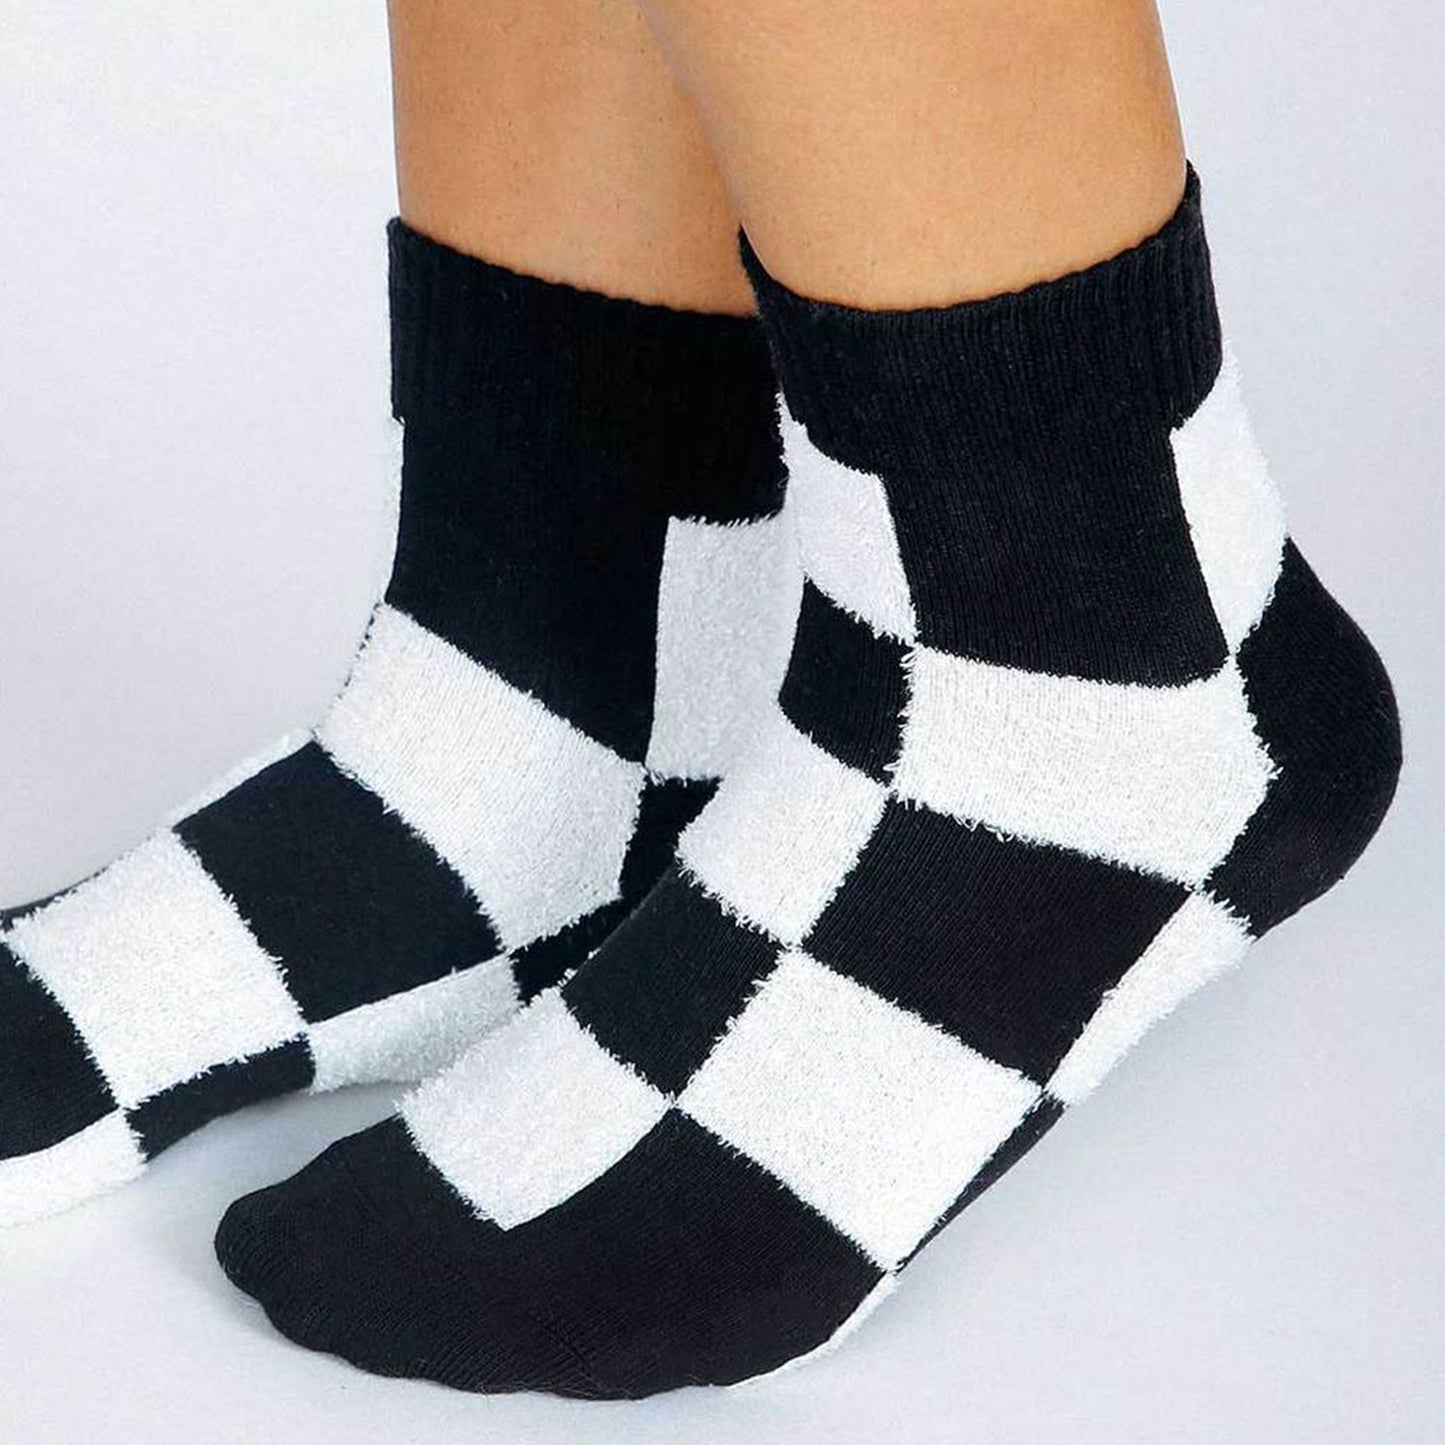 Cheq Socks